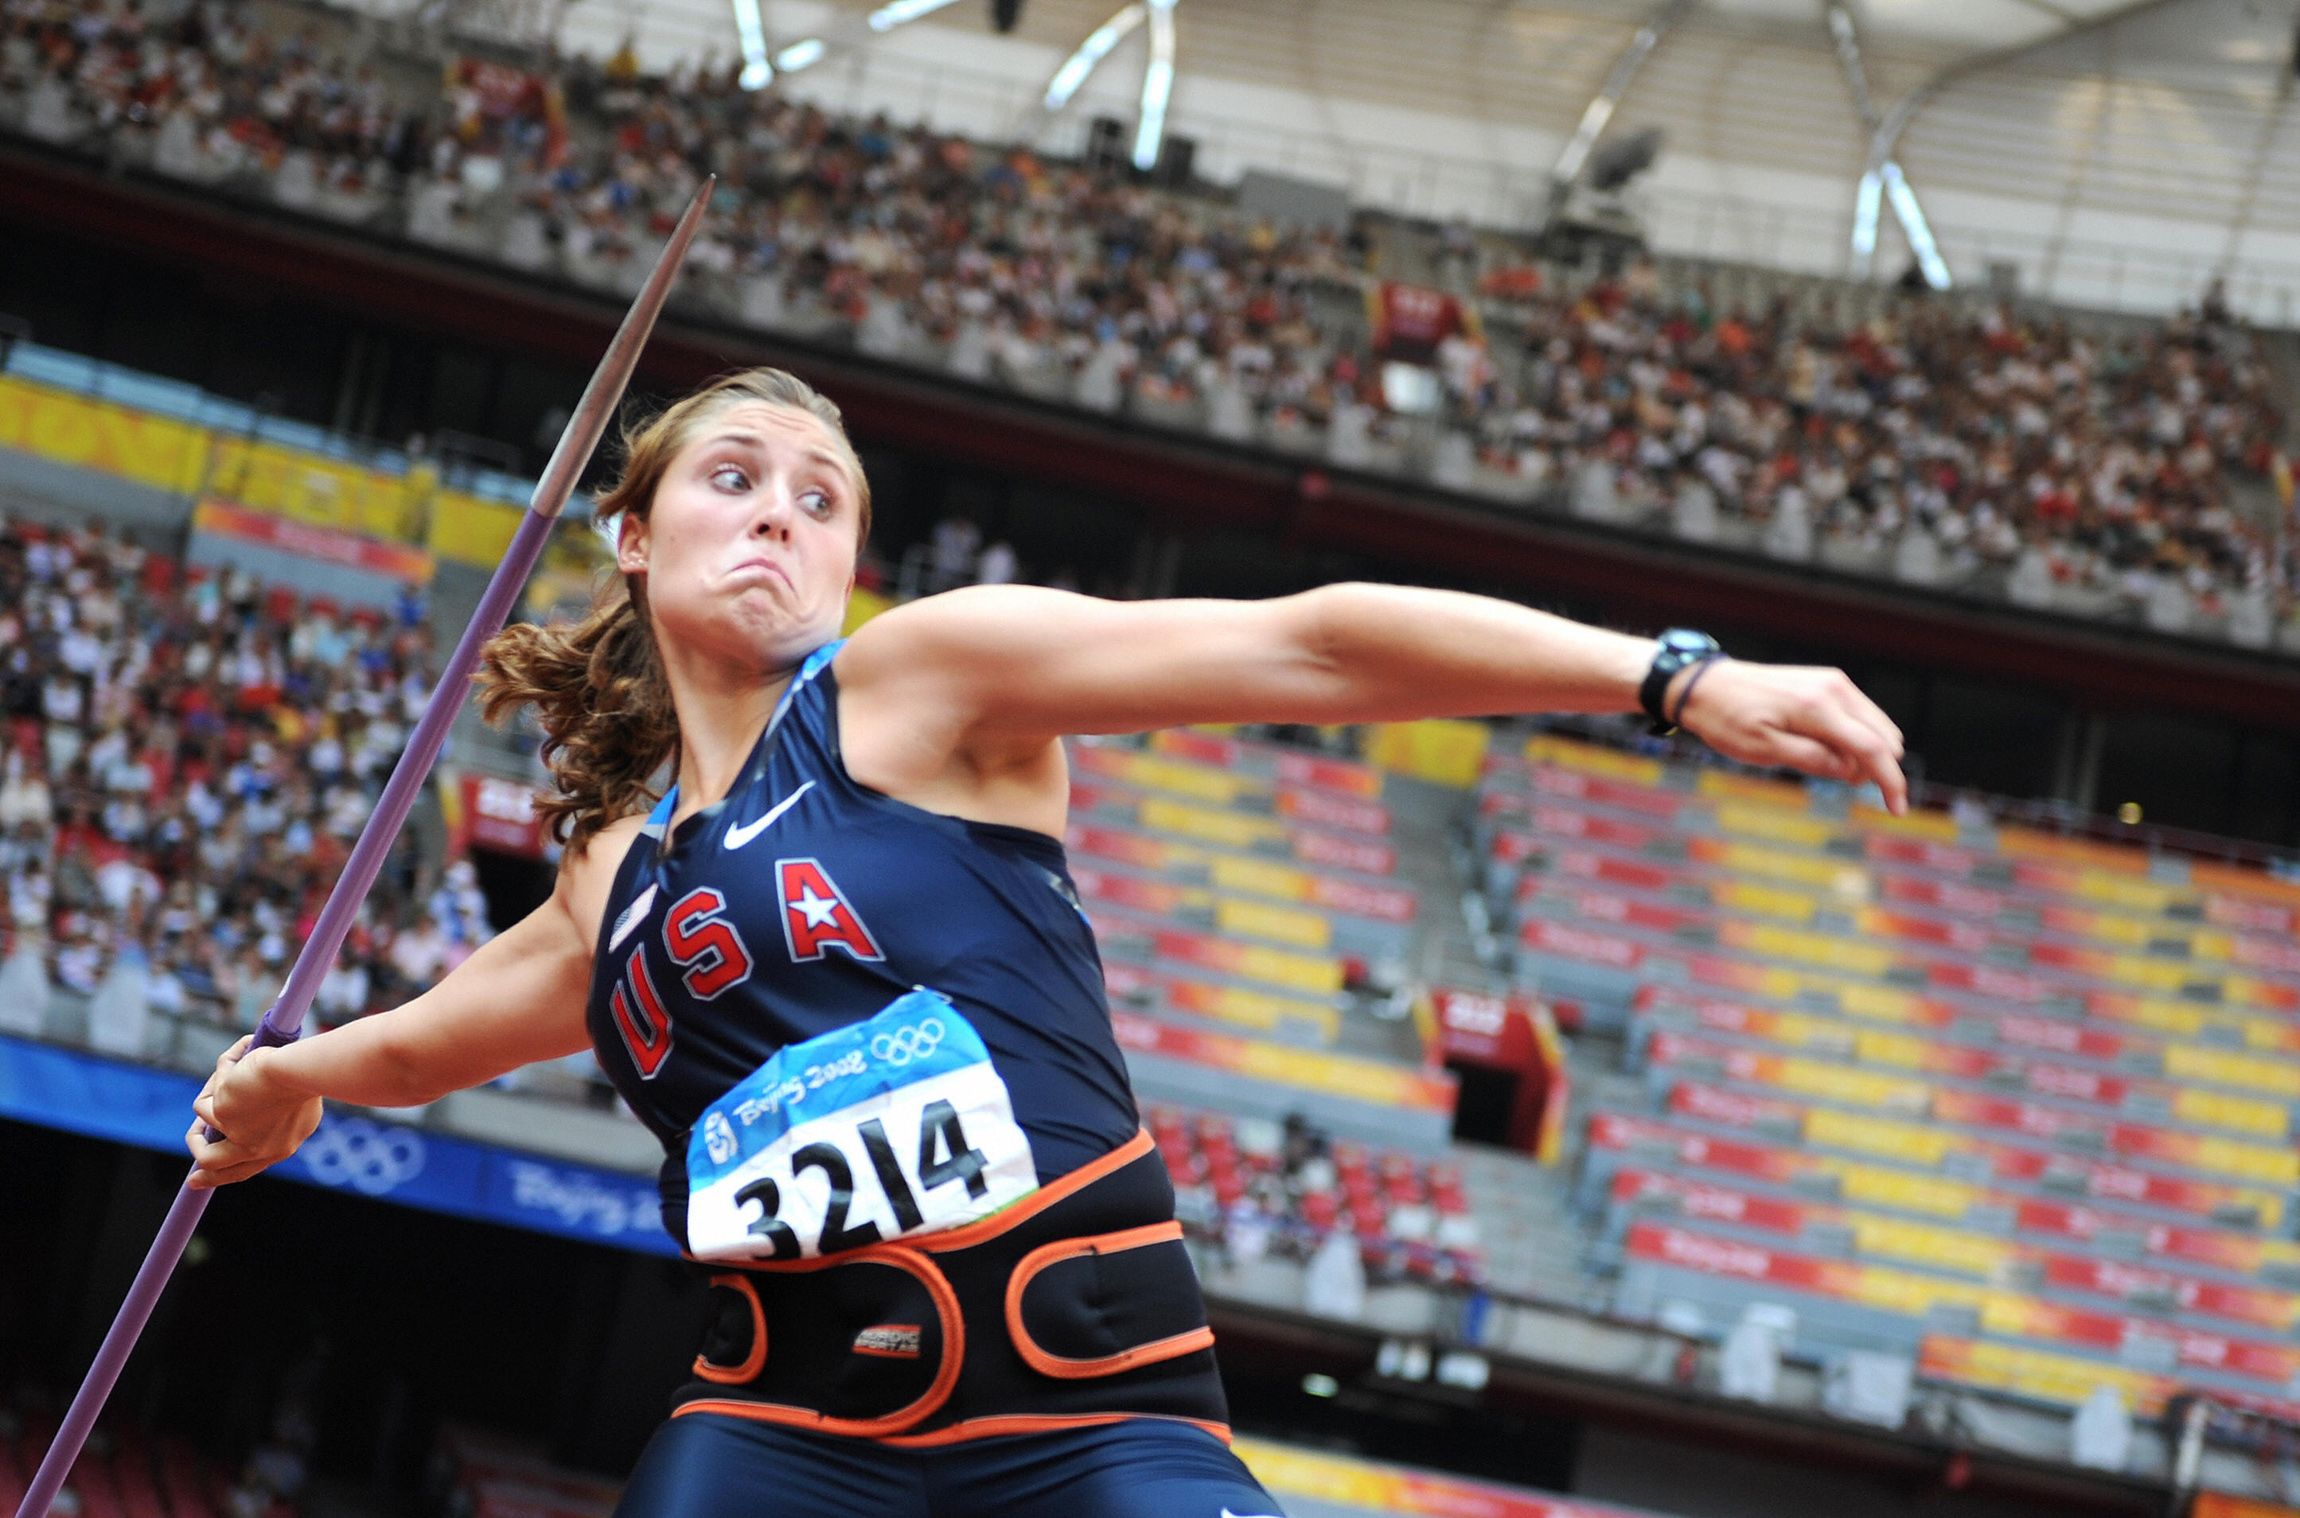 Kara Winger at the 2008 Olympics in Beijing